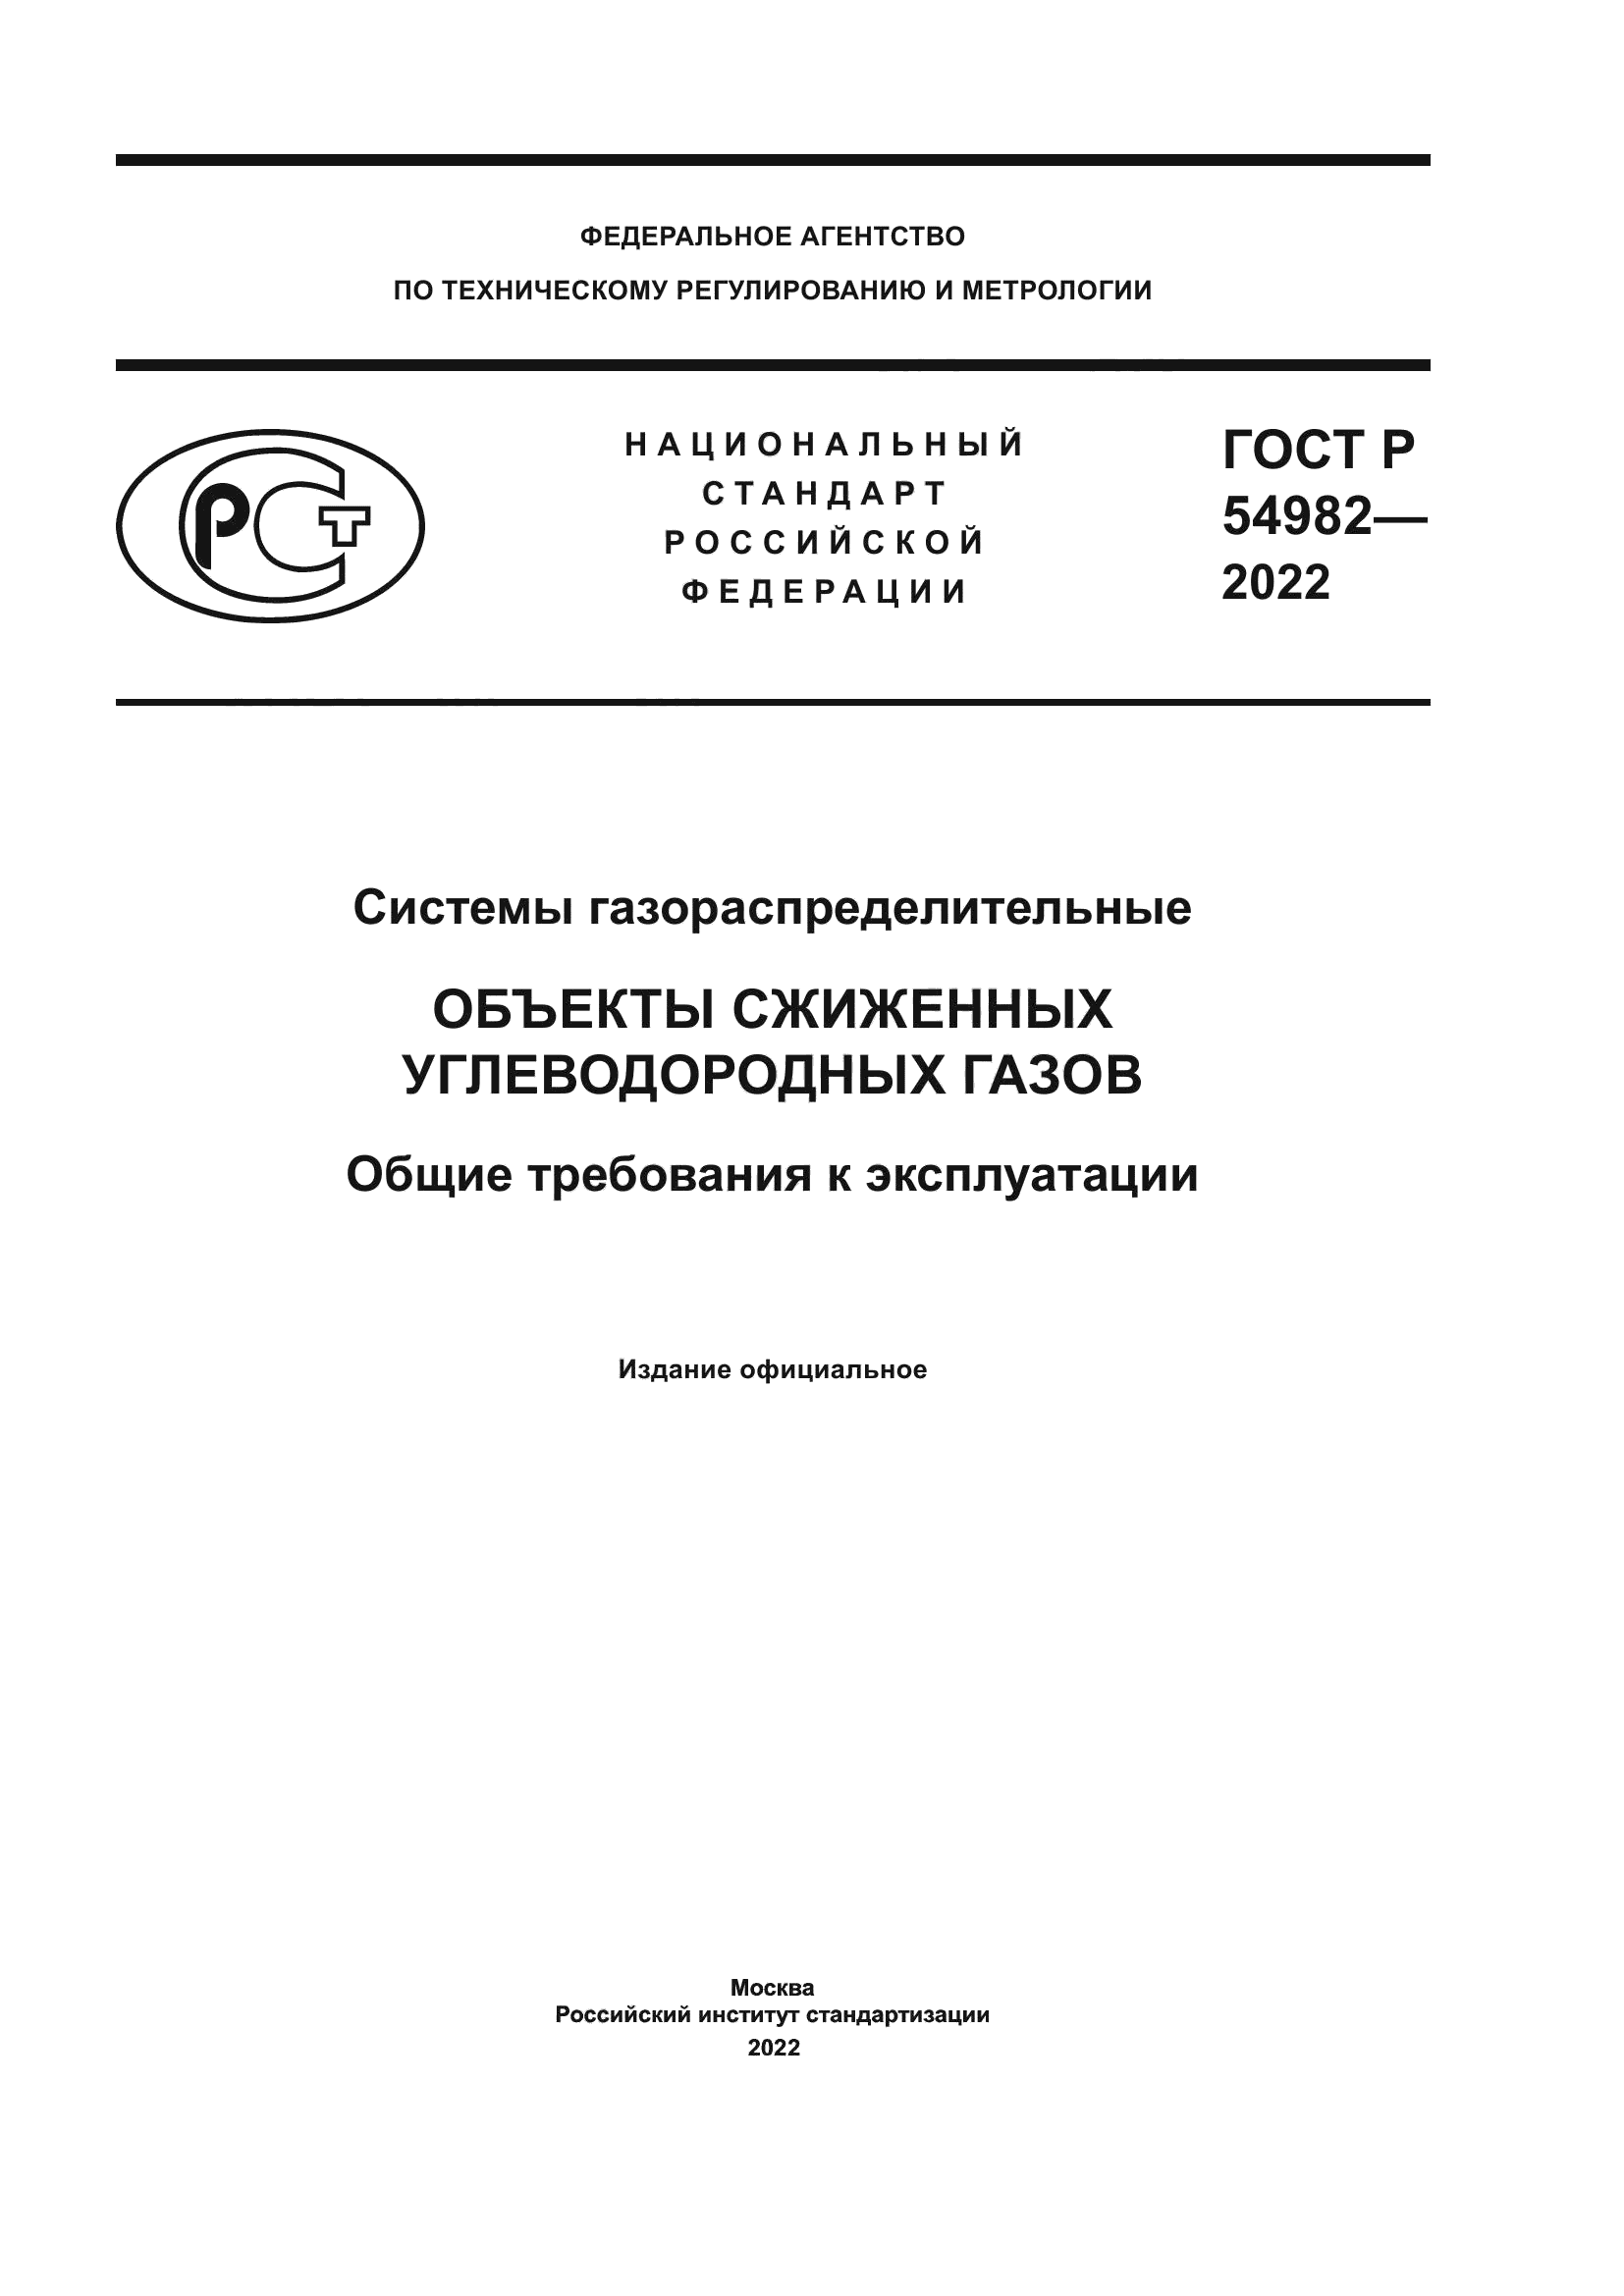 ГОСТ Р 54982-2022